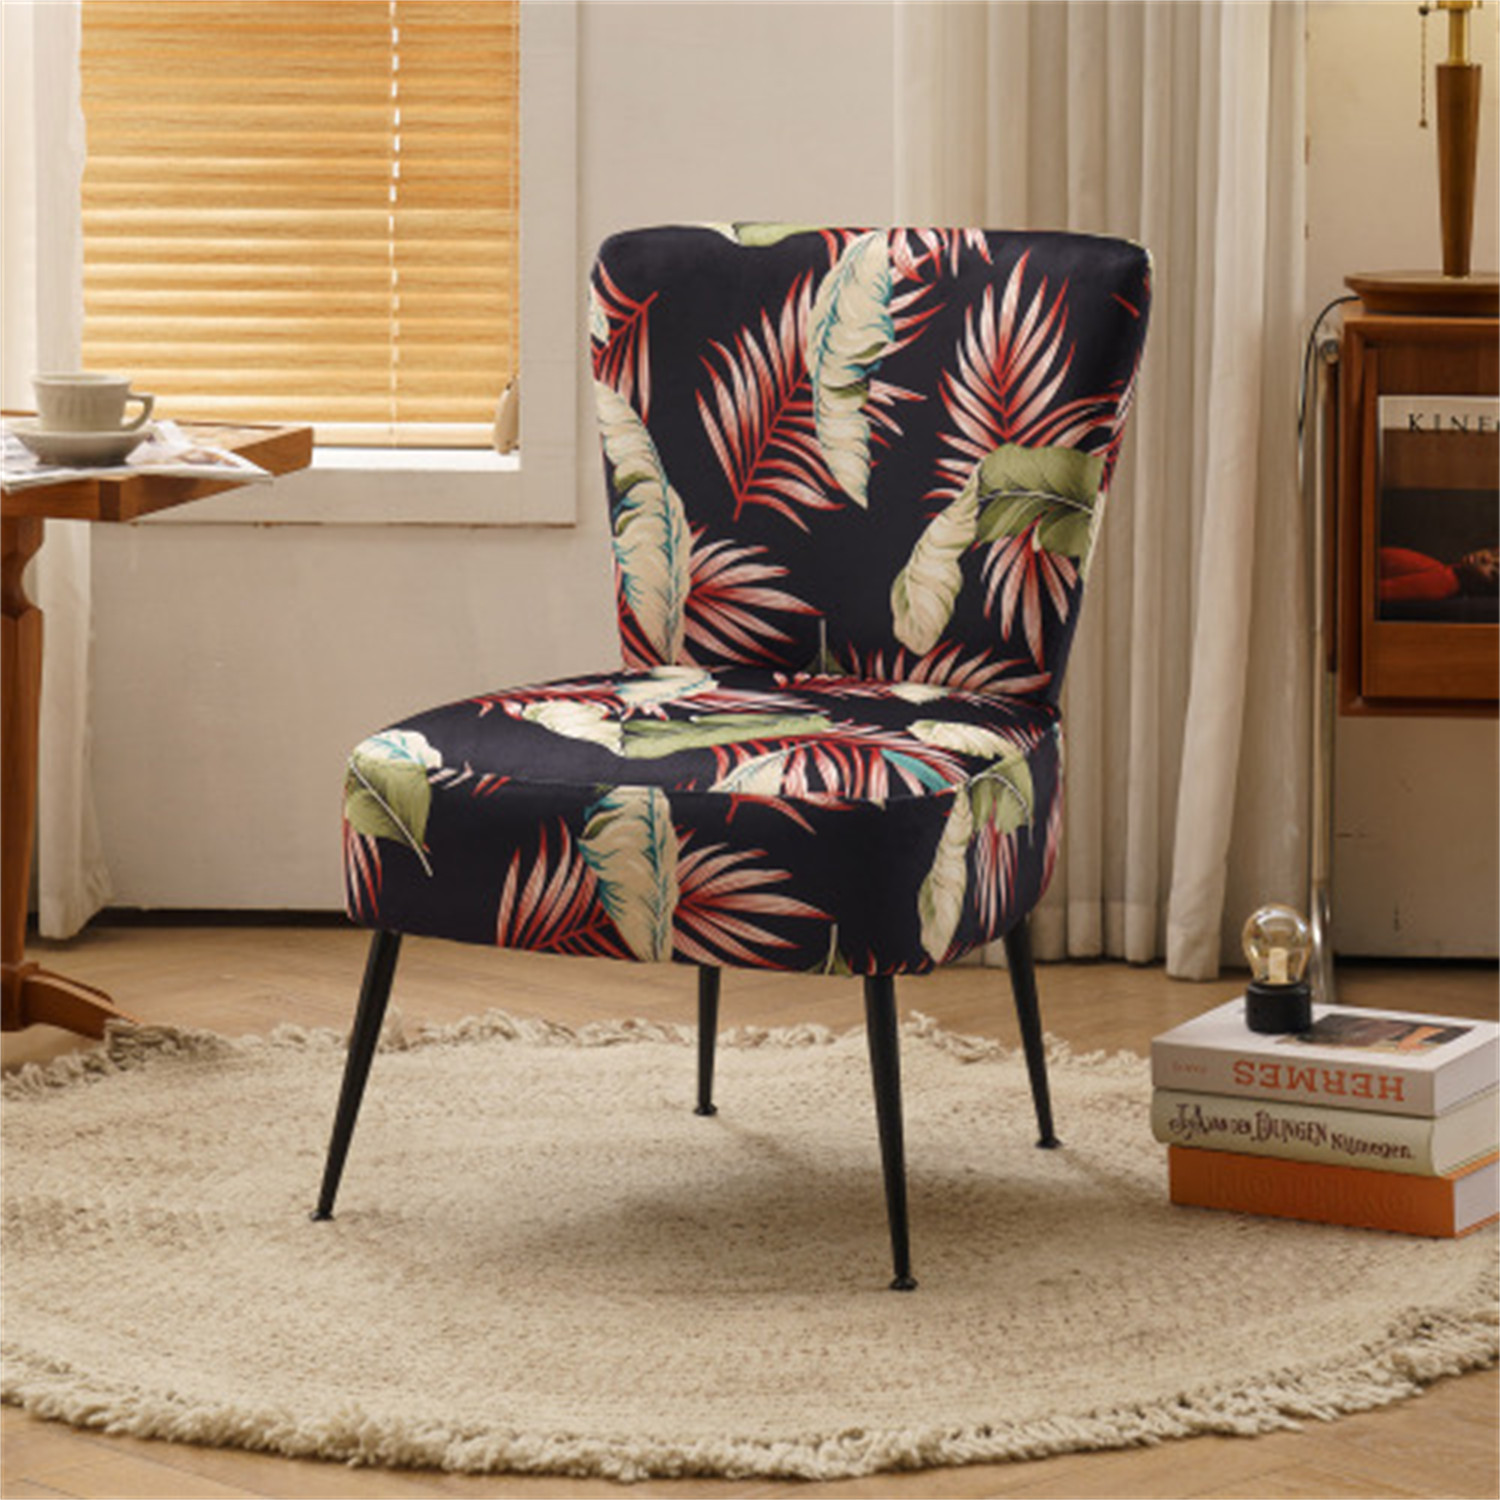 Flower Patterning Velvet Fabric Farmhouse Slipper Chair Accent Chair with Black Metal Legs for Dining Room Living Room Bedroom